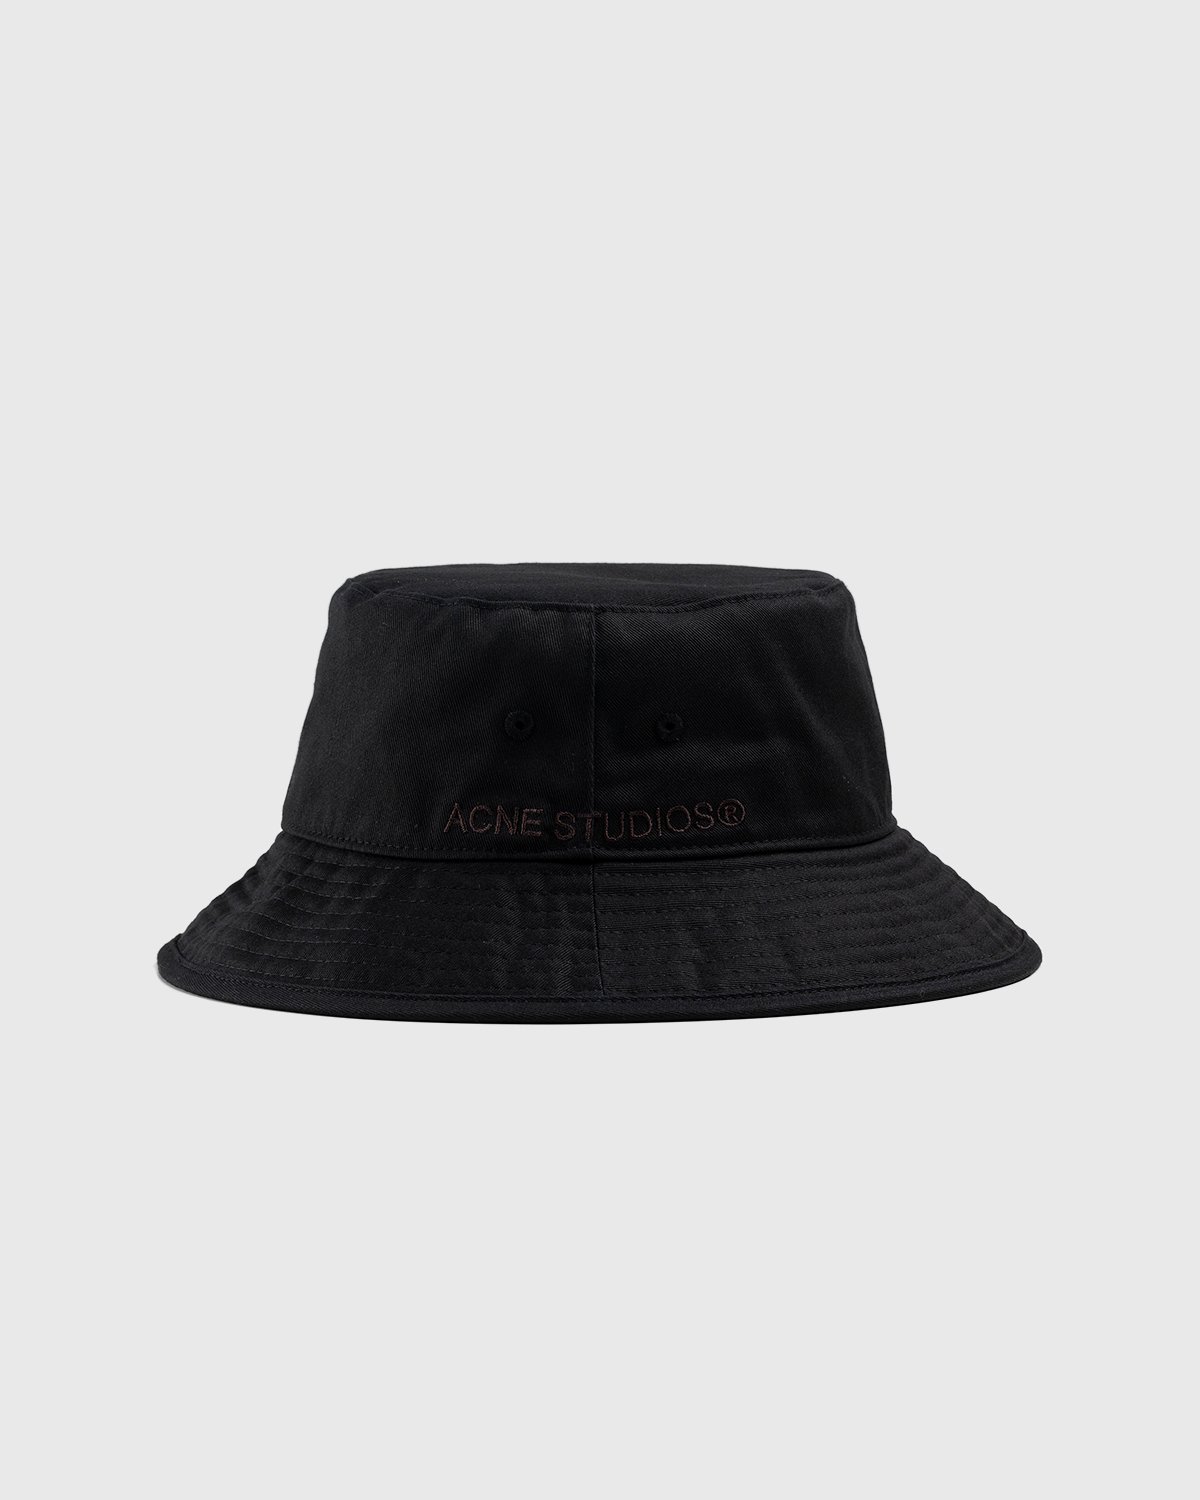 Acne Studios - Twill Bucket Hat Black - Accessories - Black - Image 1